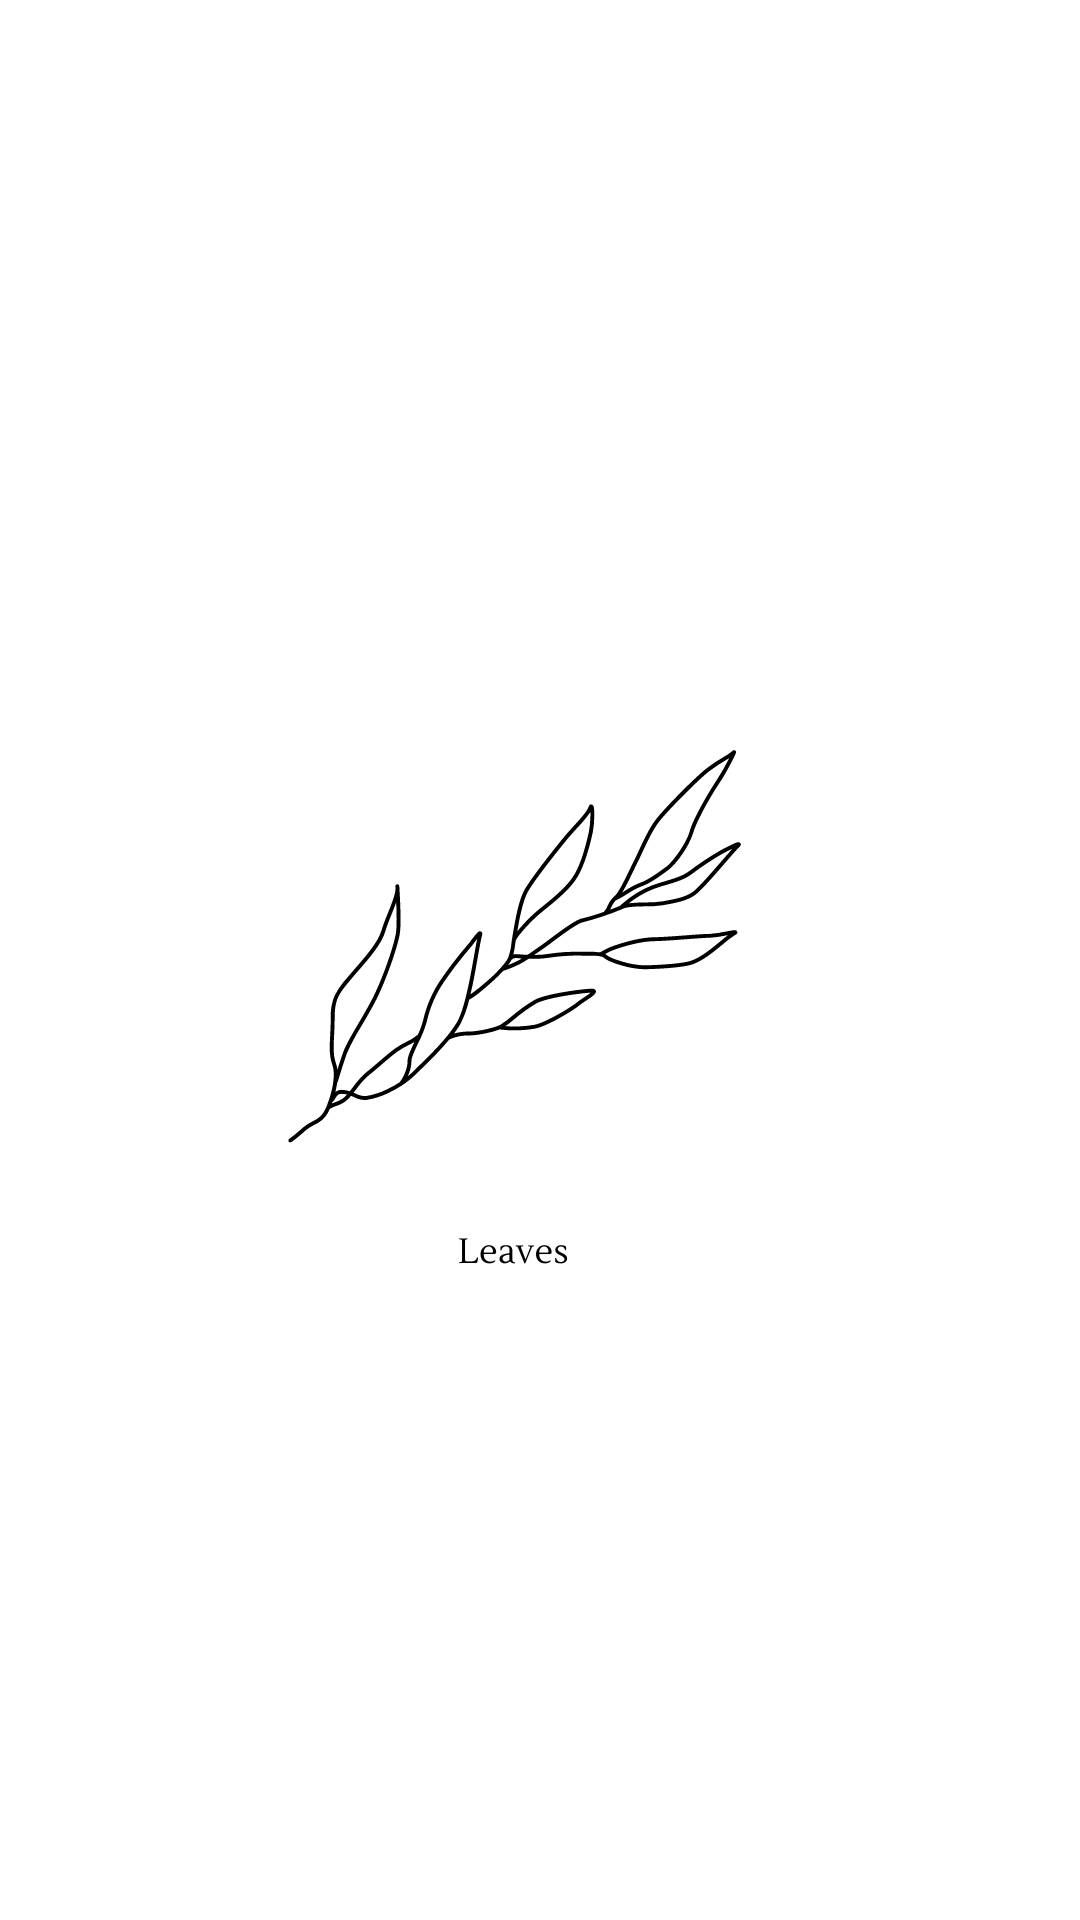 A minimalist leaf illustration on a white background - White, cute white